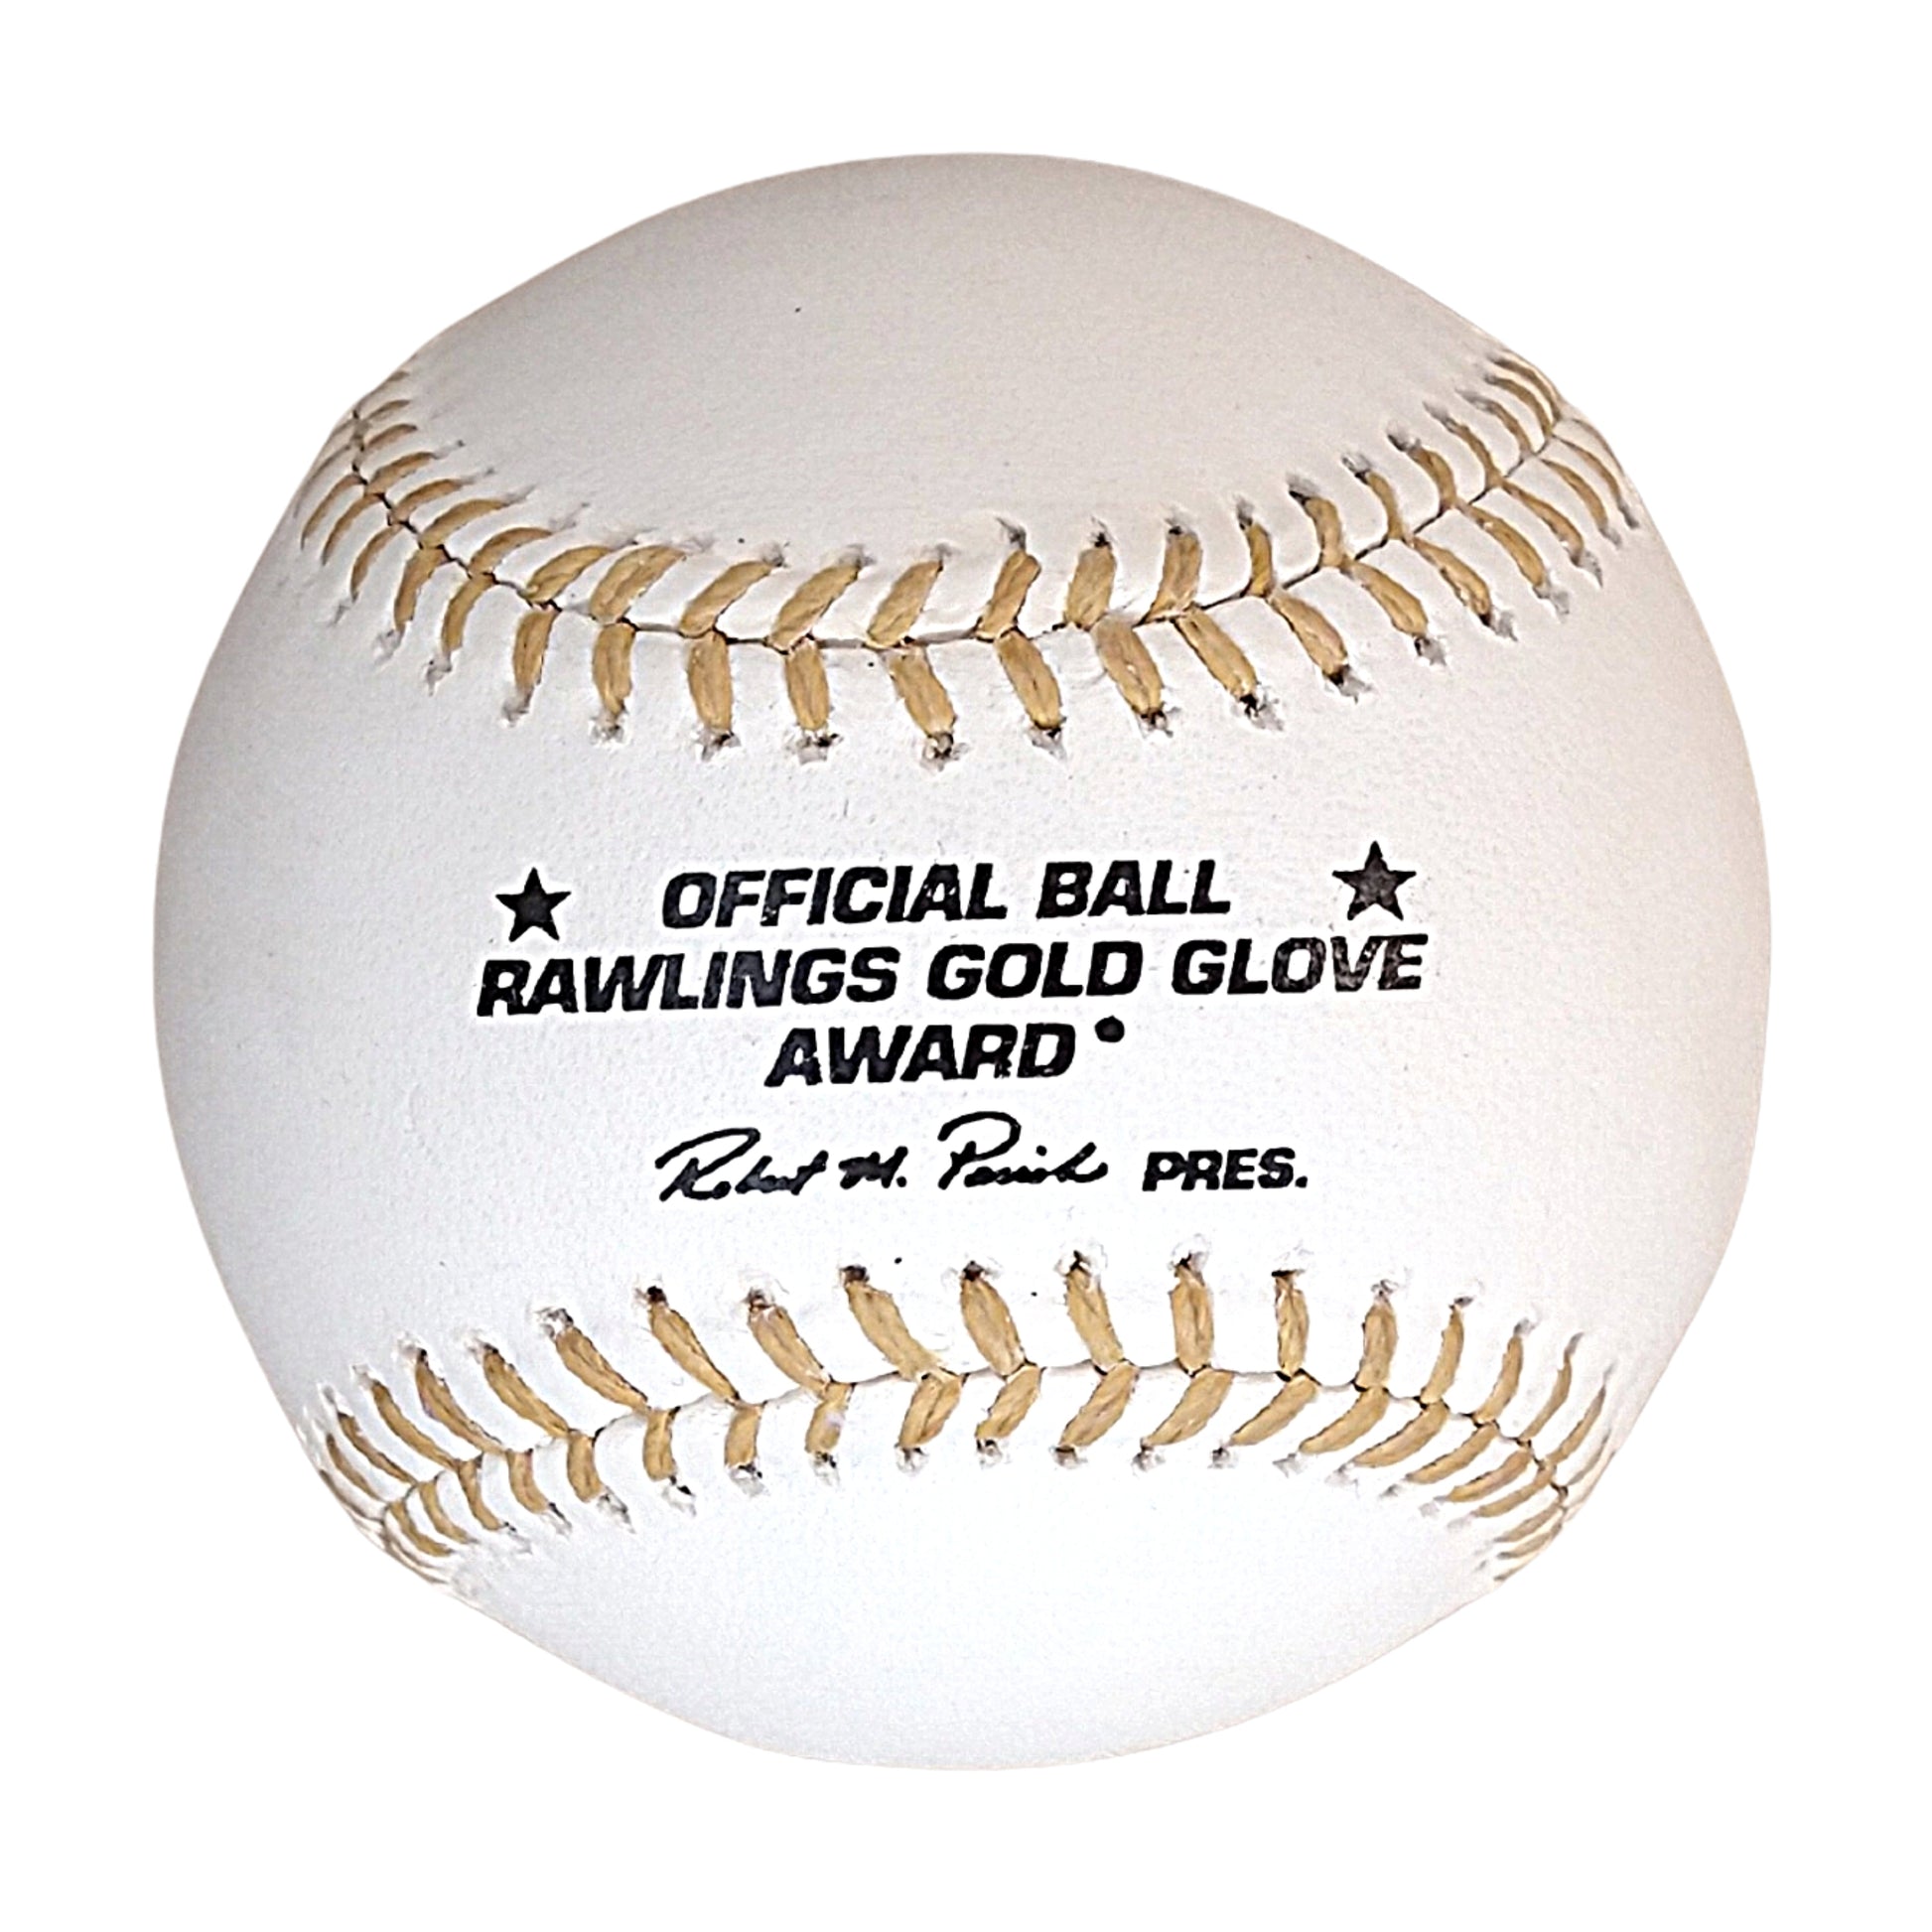 Baseballs- Autographed- Robinson Cano Signed Rawlings Gold Glove Award Logo ROMLB Baseball - New York Mets - Seattle Mariners - New York Yankees - Proof Photo - Beckett BAS Authentication - 103